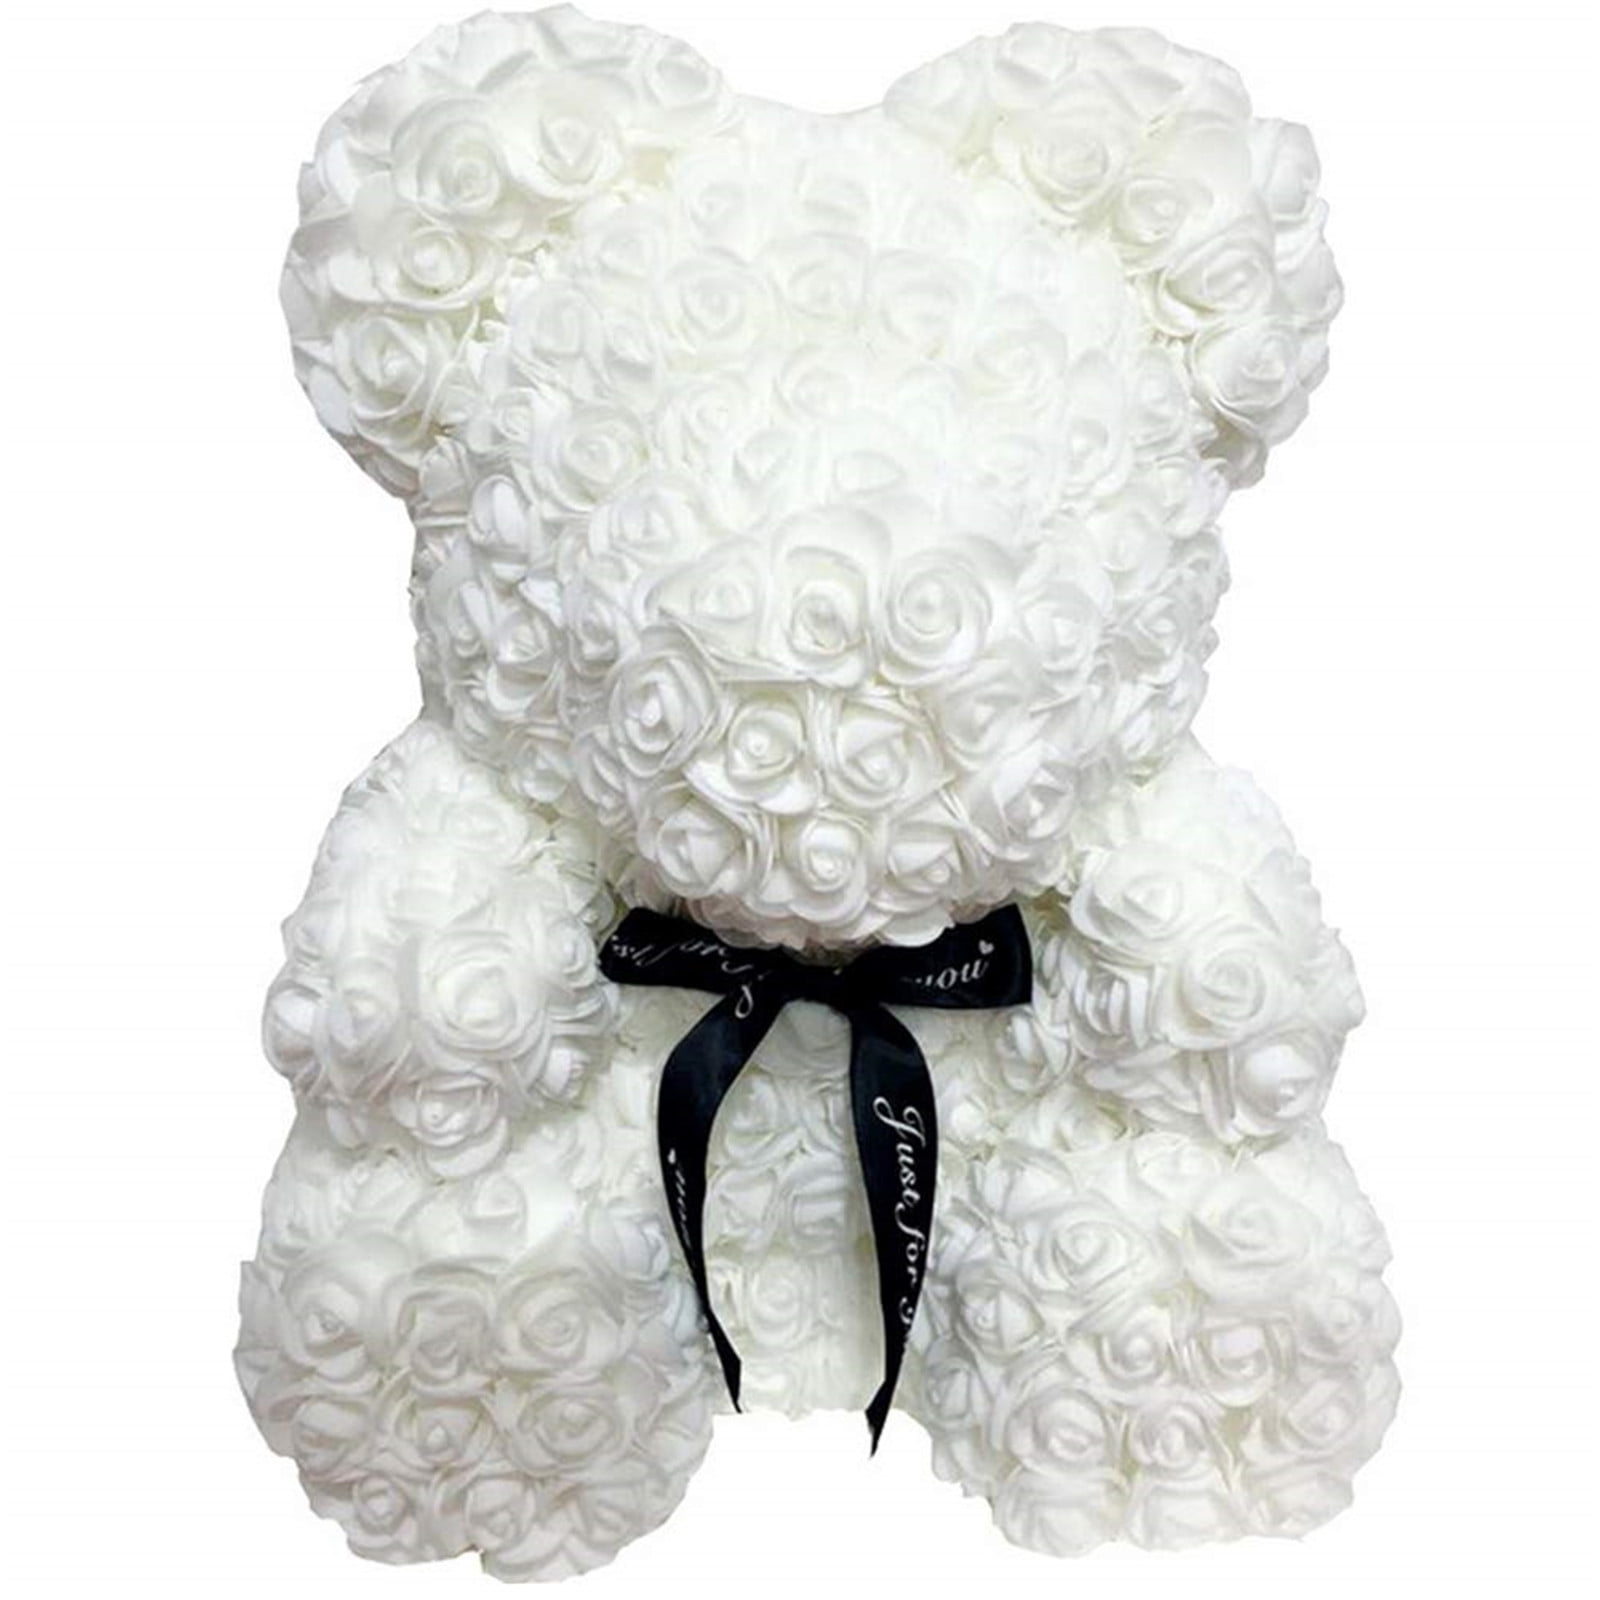 Details about   Birthday Gift Teddy Bear Rose 25cm Flower Foam Heart Wedding Anniversary 